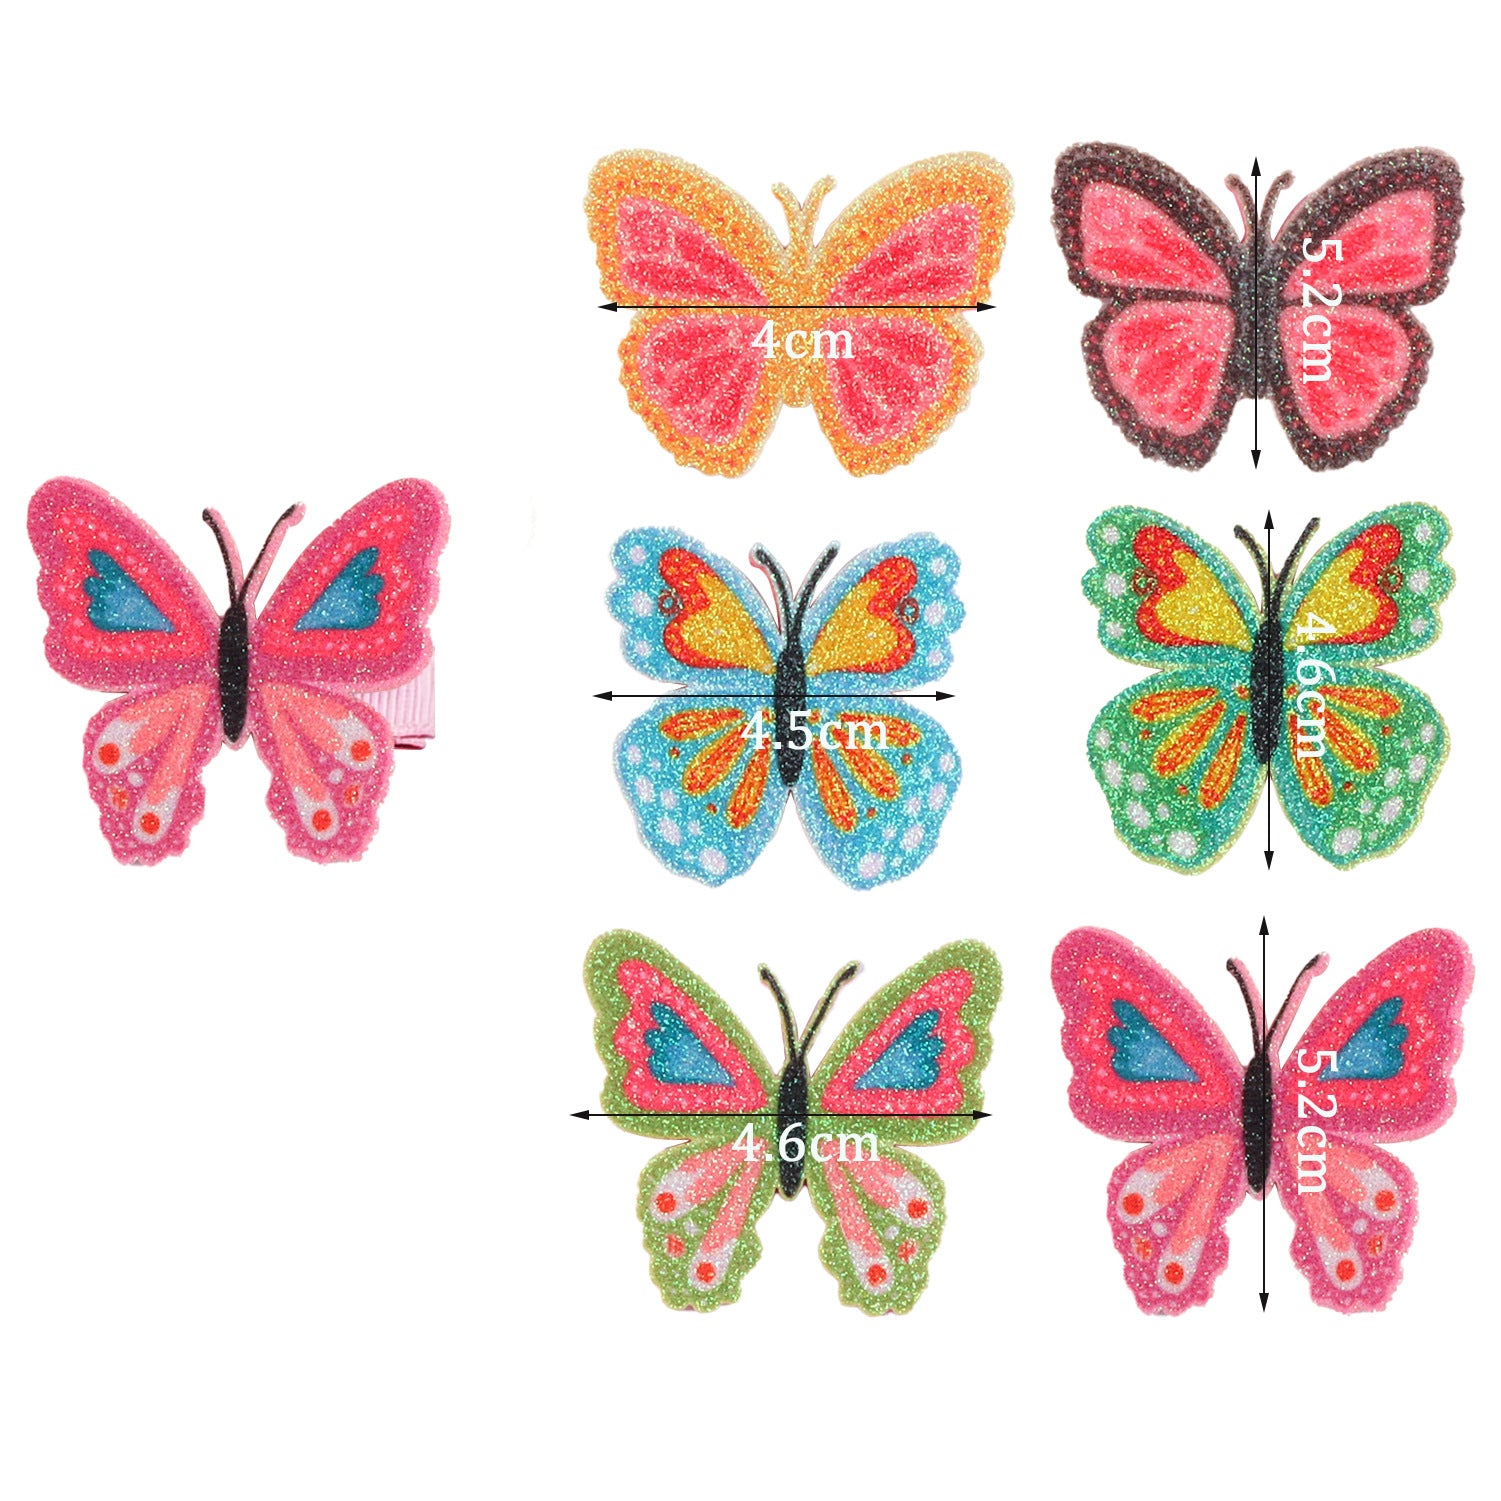 Beautiful butterfly clips